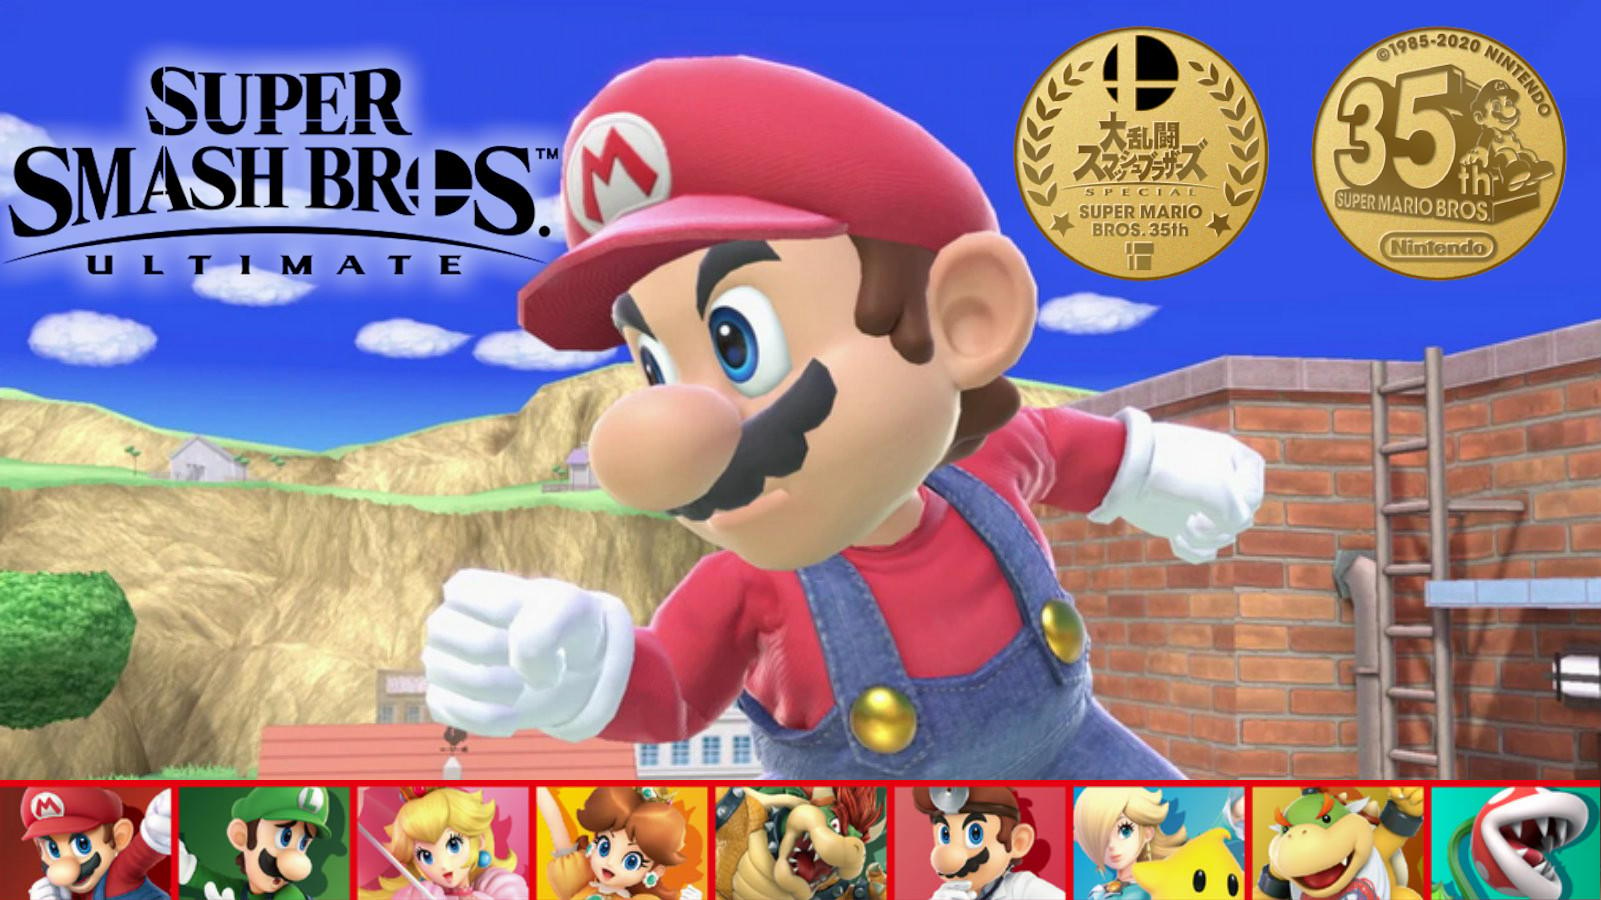 Nintendo announces new games for Mario's 35th anniversary, Nintendo